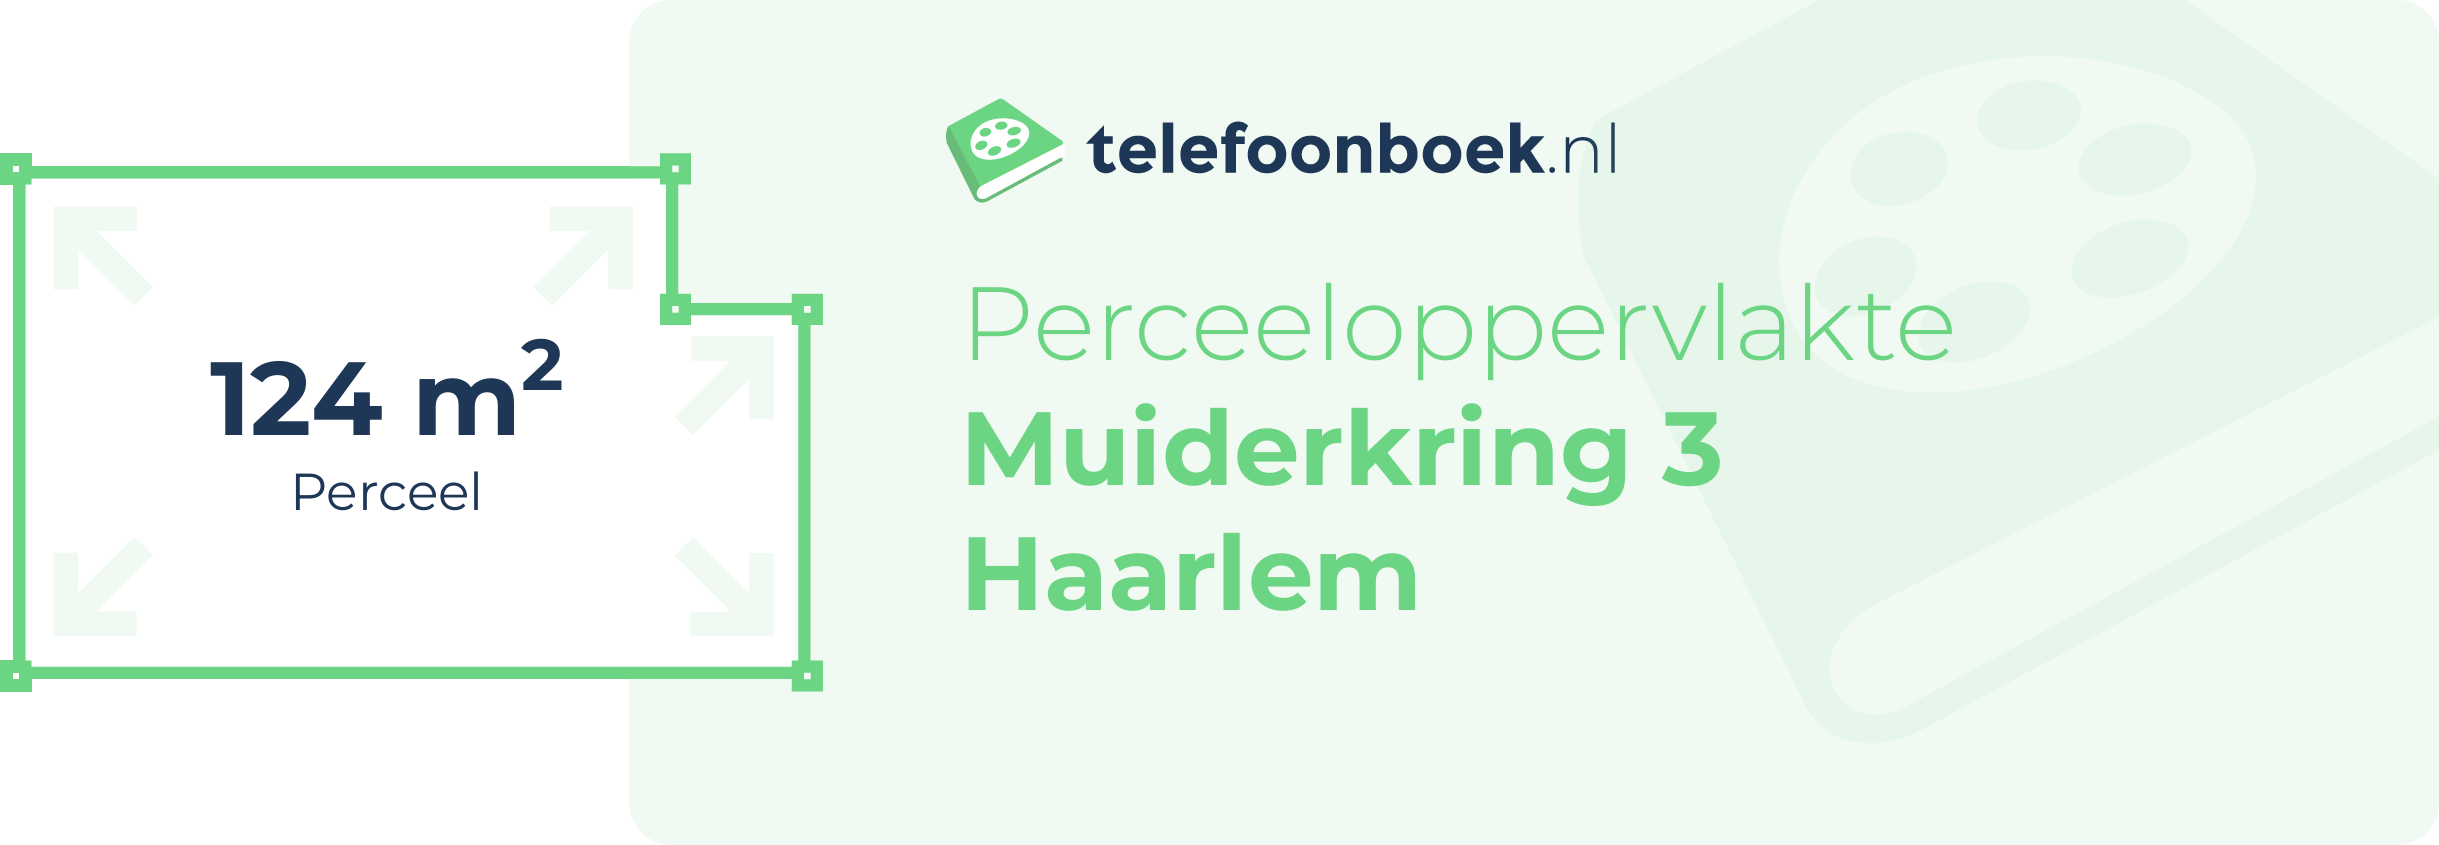 Perceeloppervlakte Muiderkring 3 Haarlem